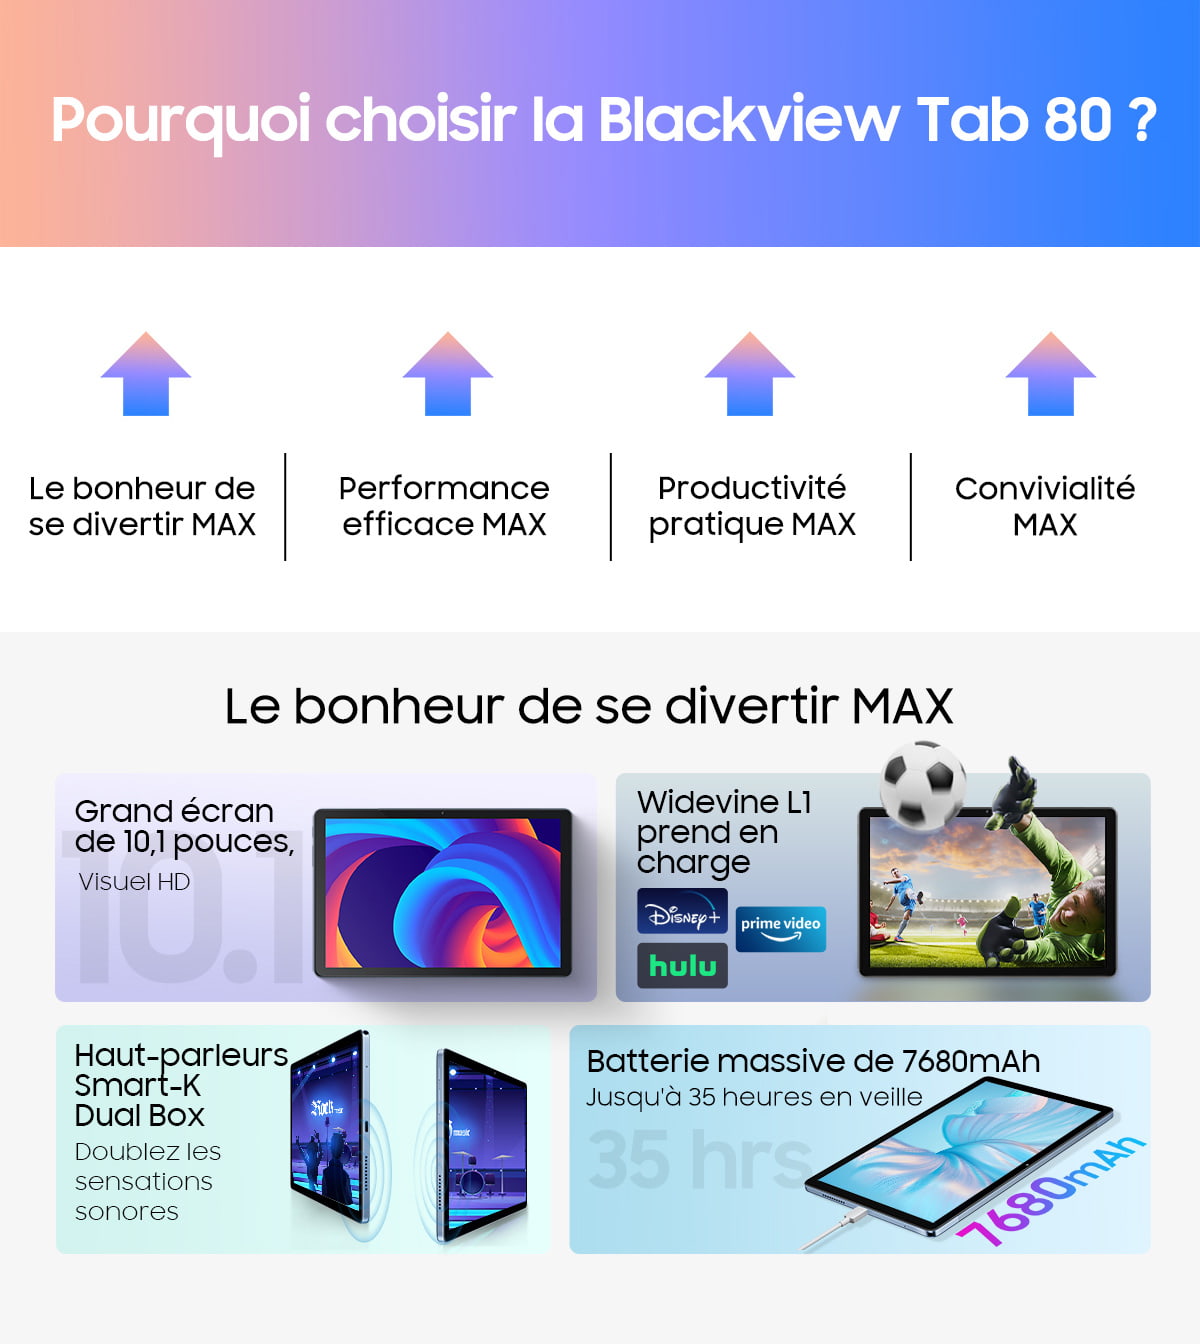 Blackview Tab 80 french description